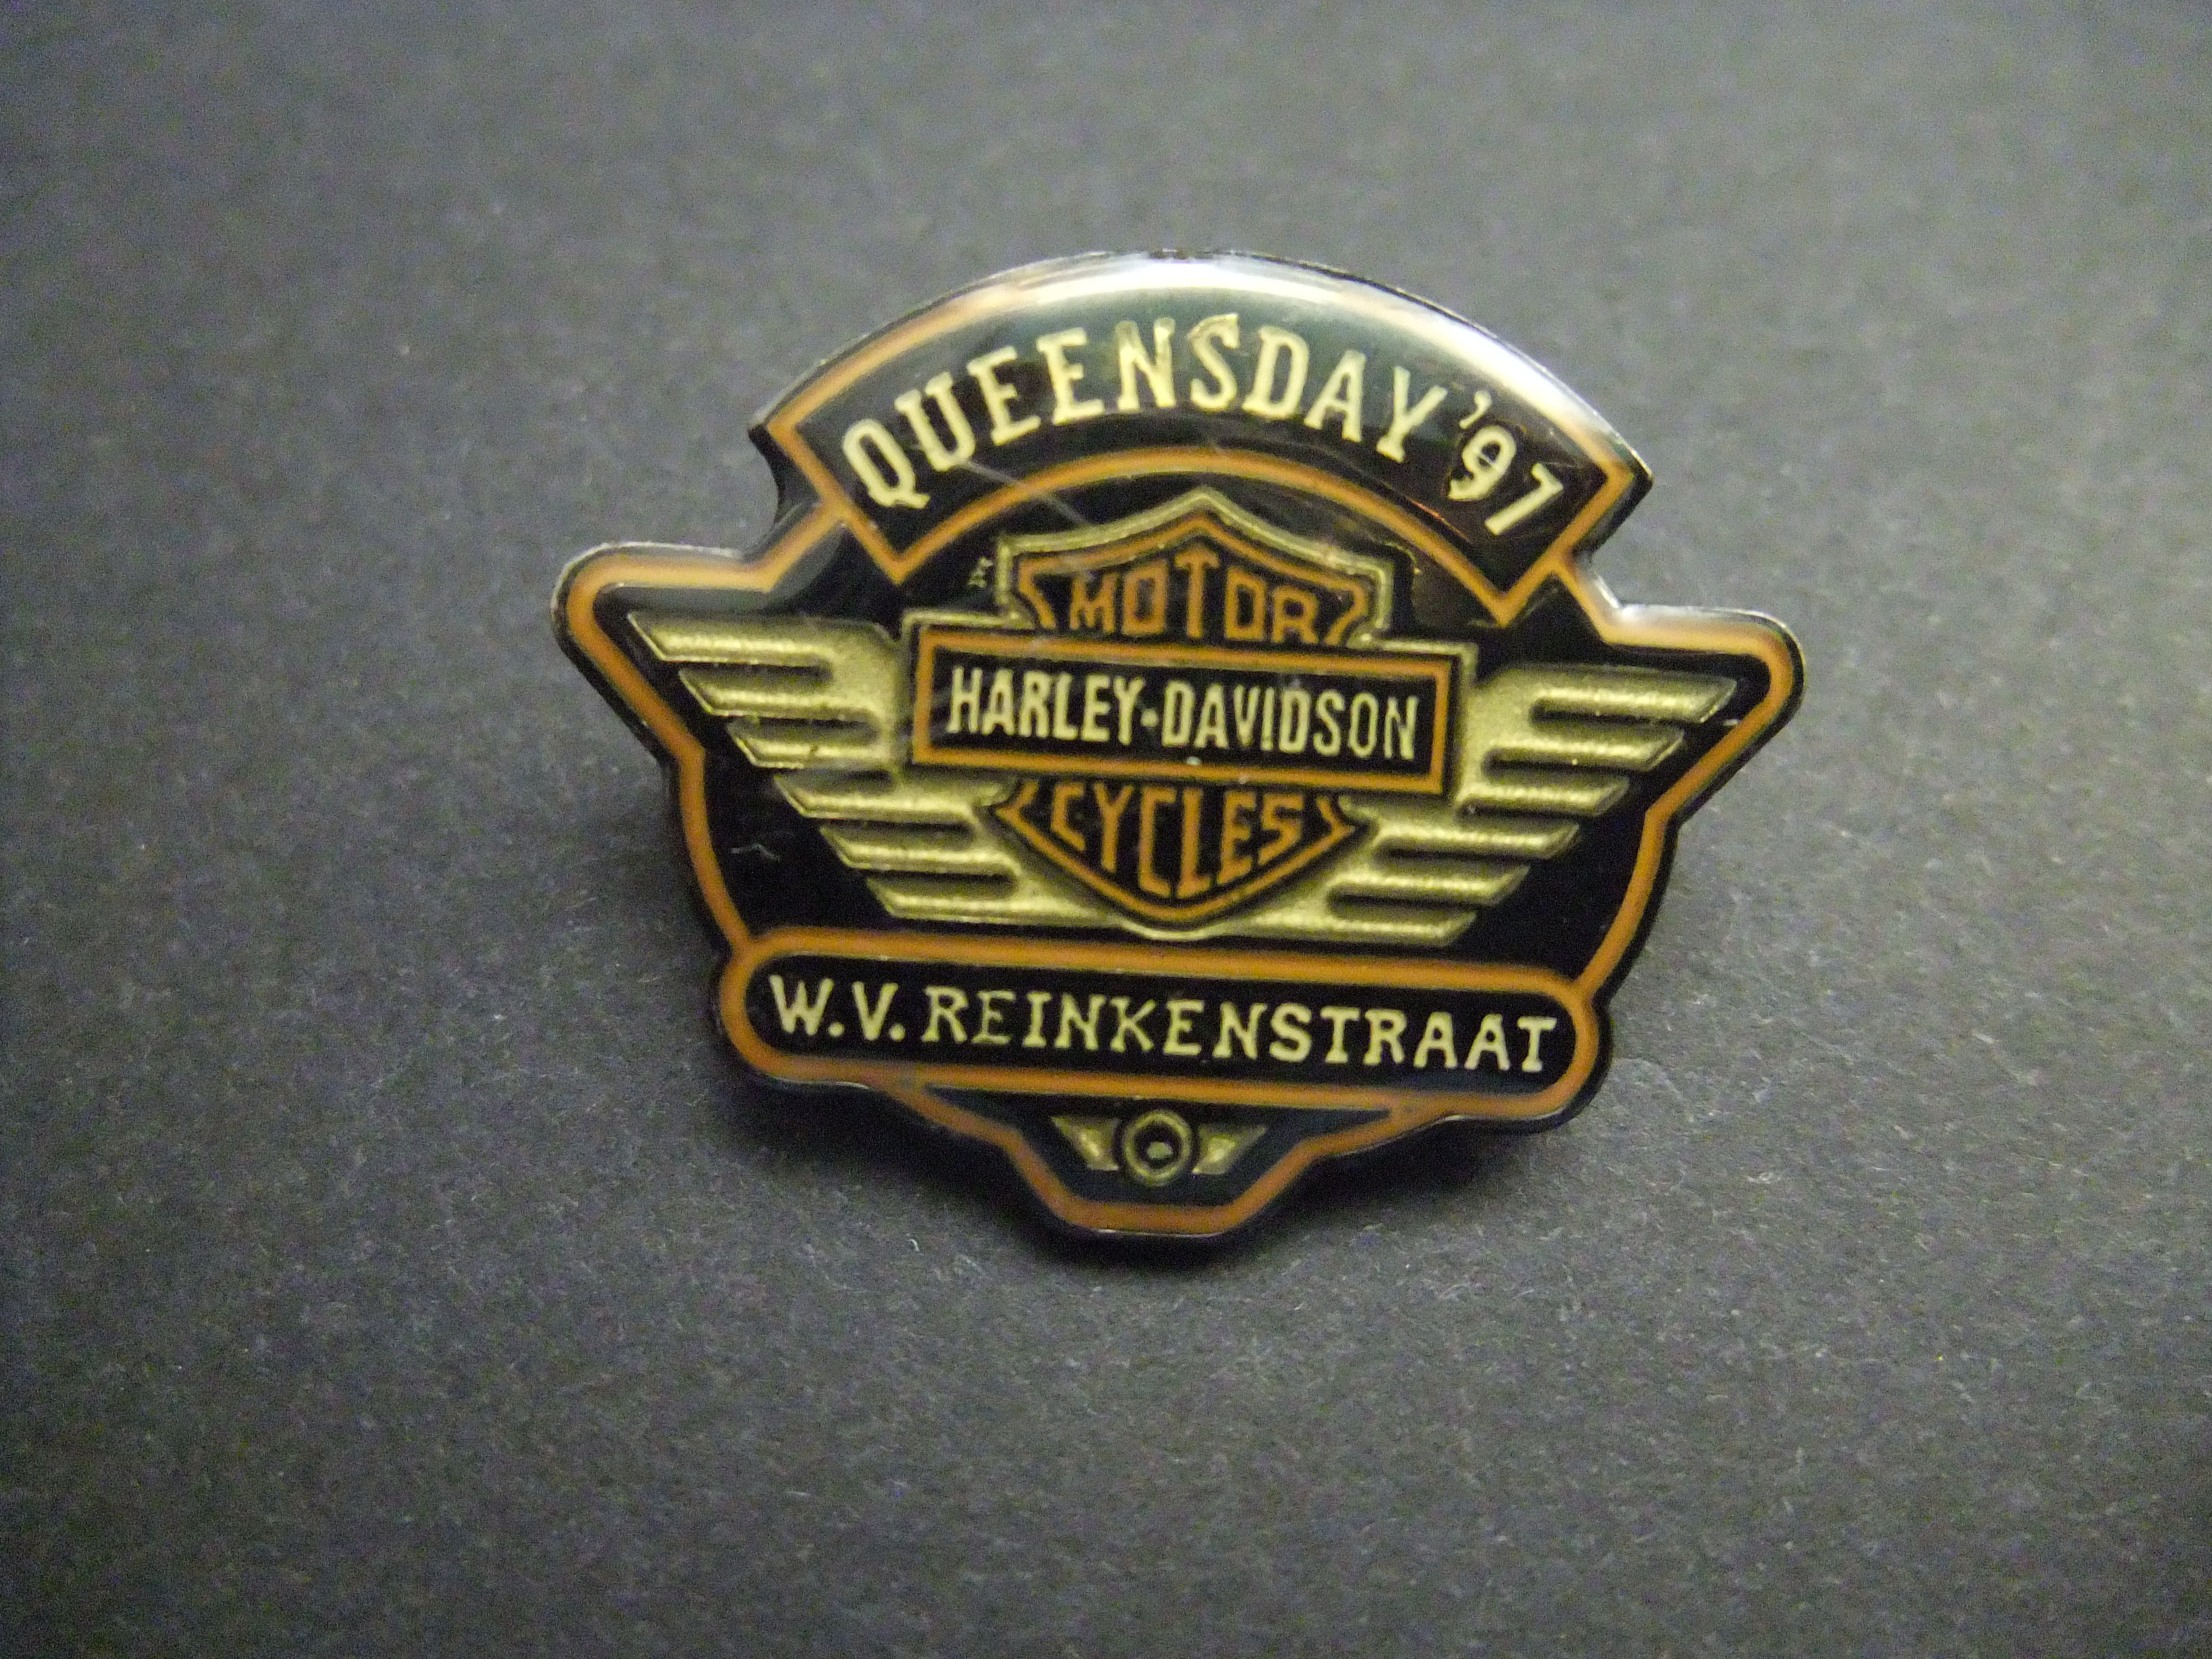 Harley-Davidson Queensday 1997 W.V. Reikenstraat Den Haag ( Duinoord)